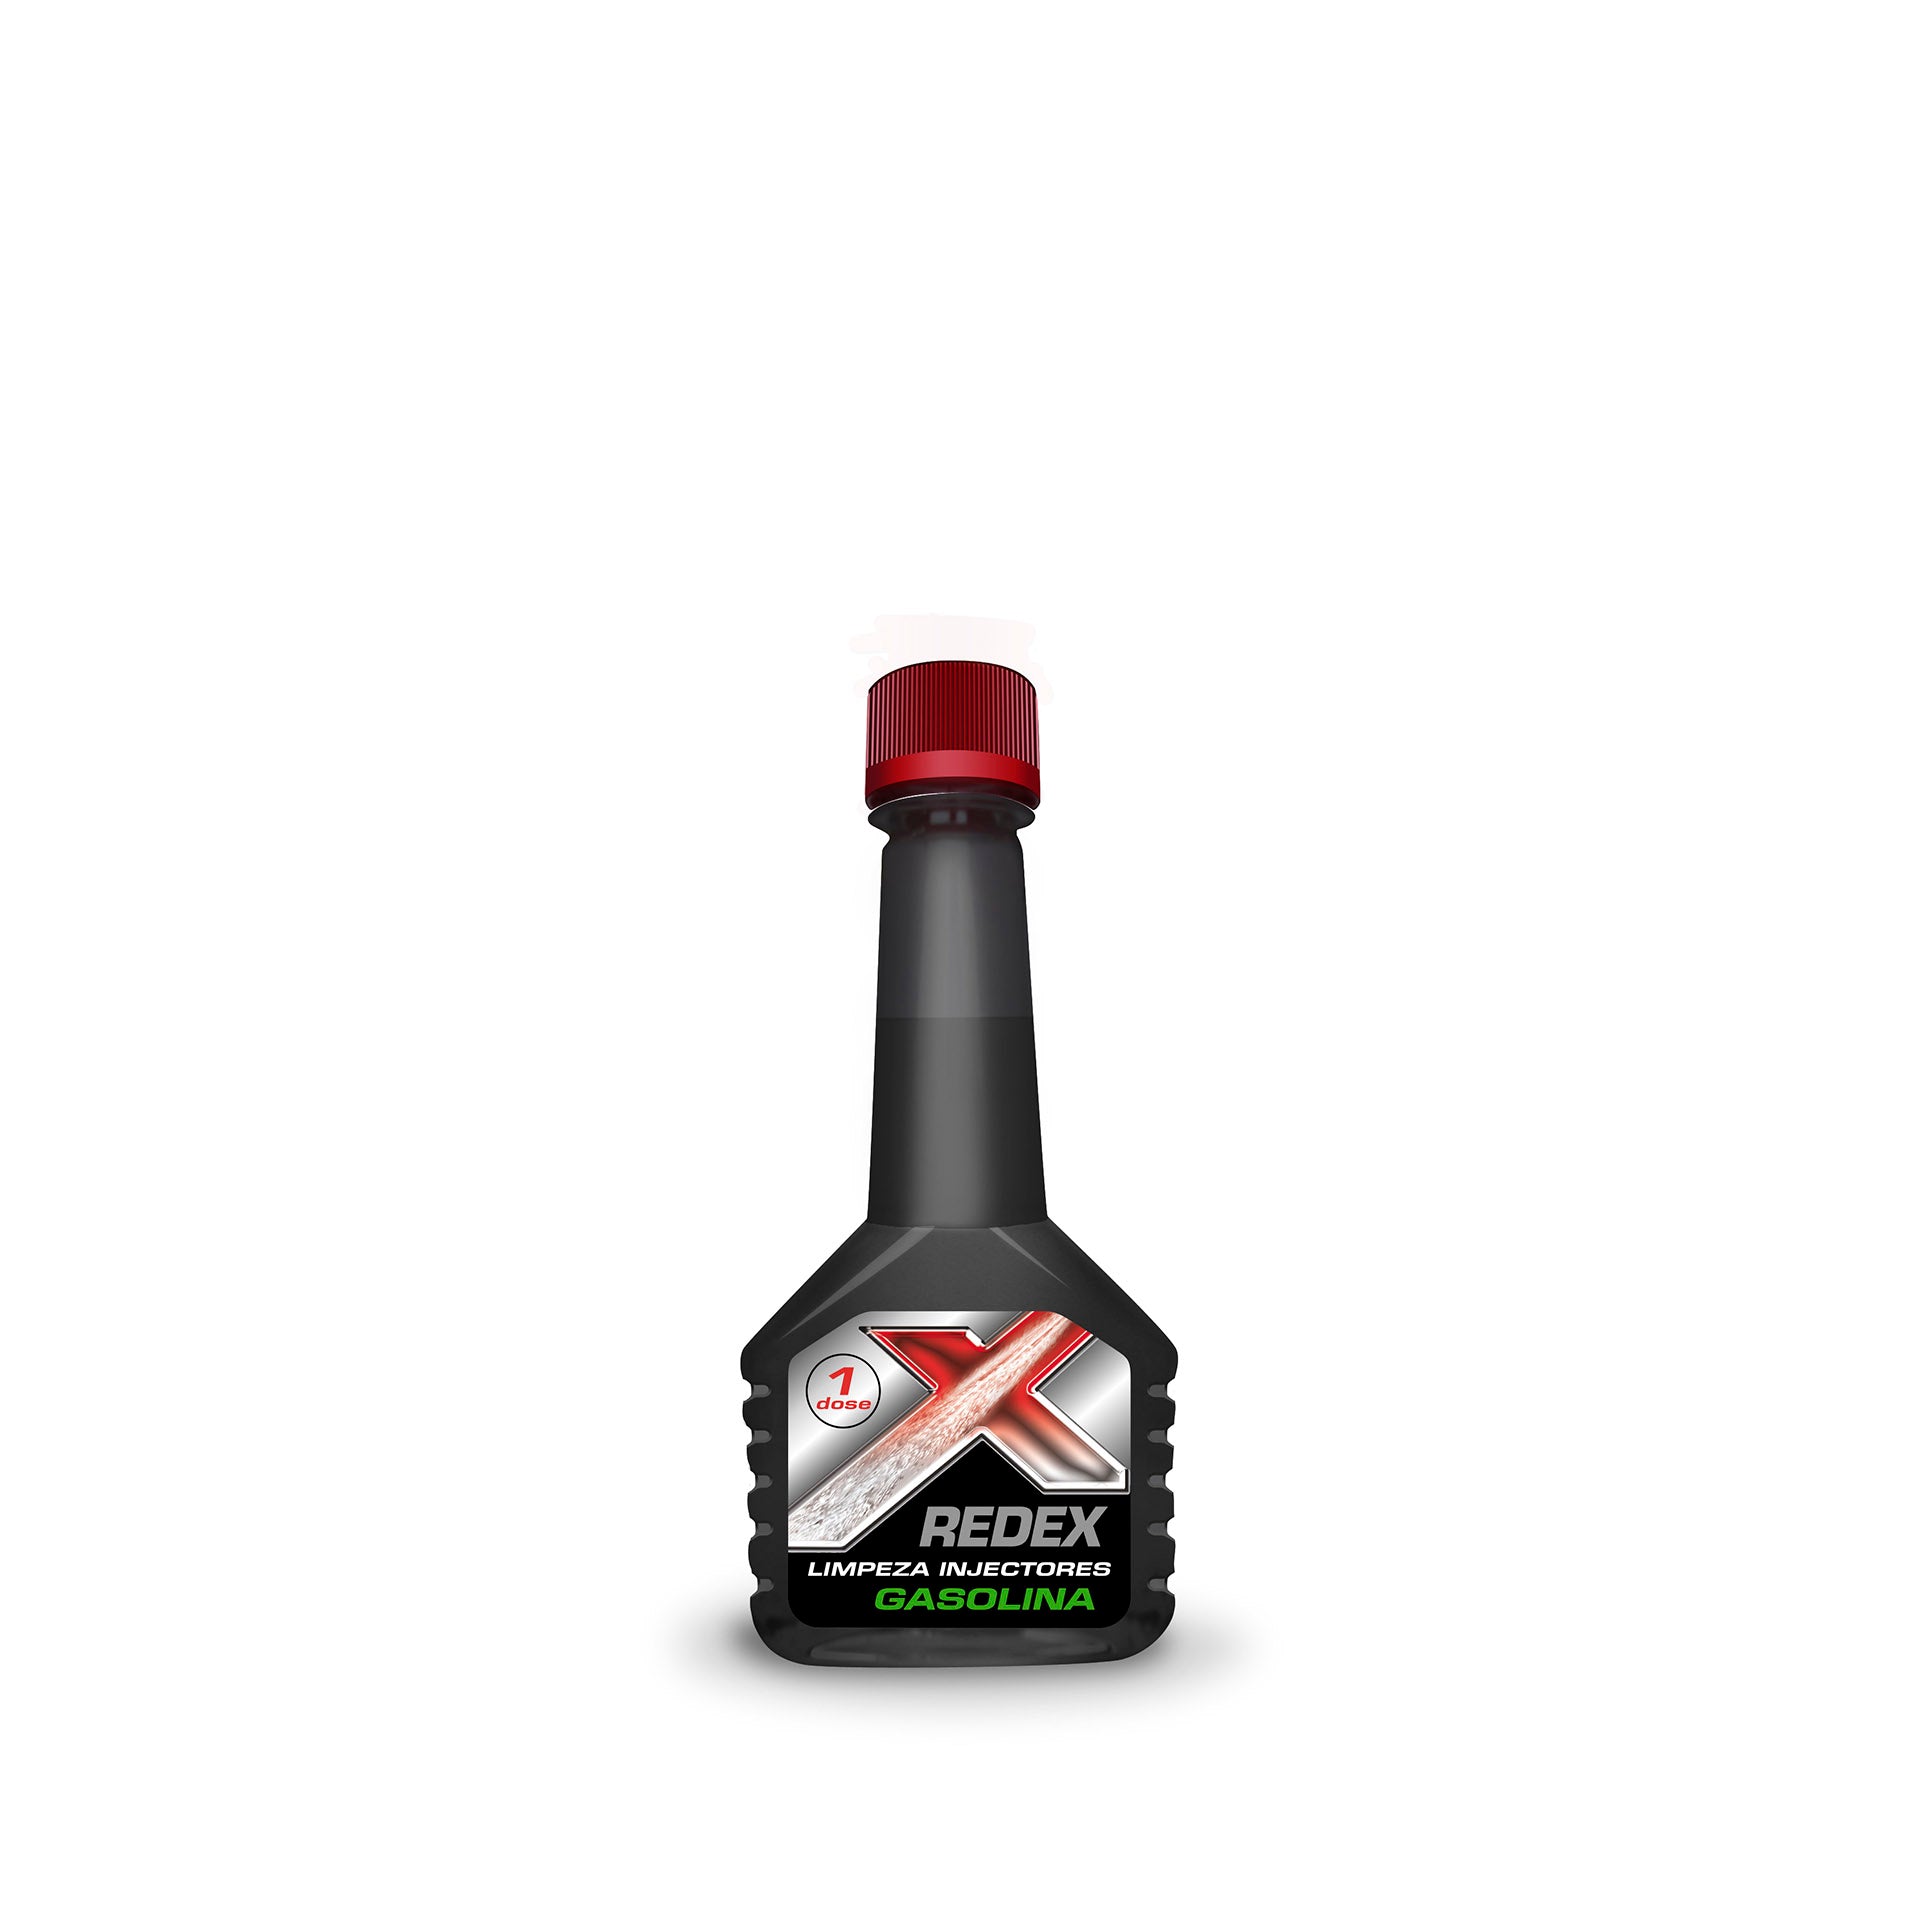 Redex Limpeza injectores gasolina 250ml